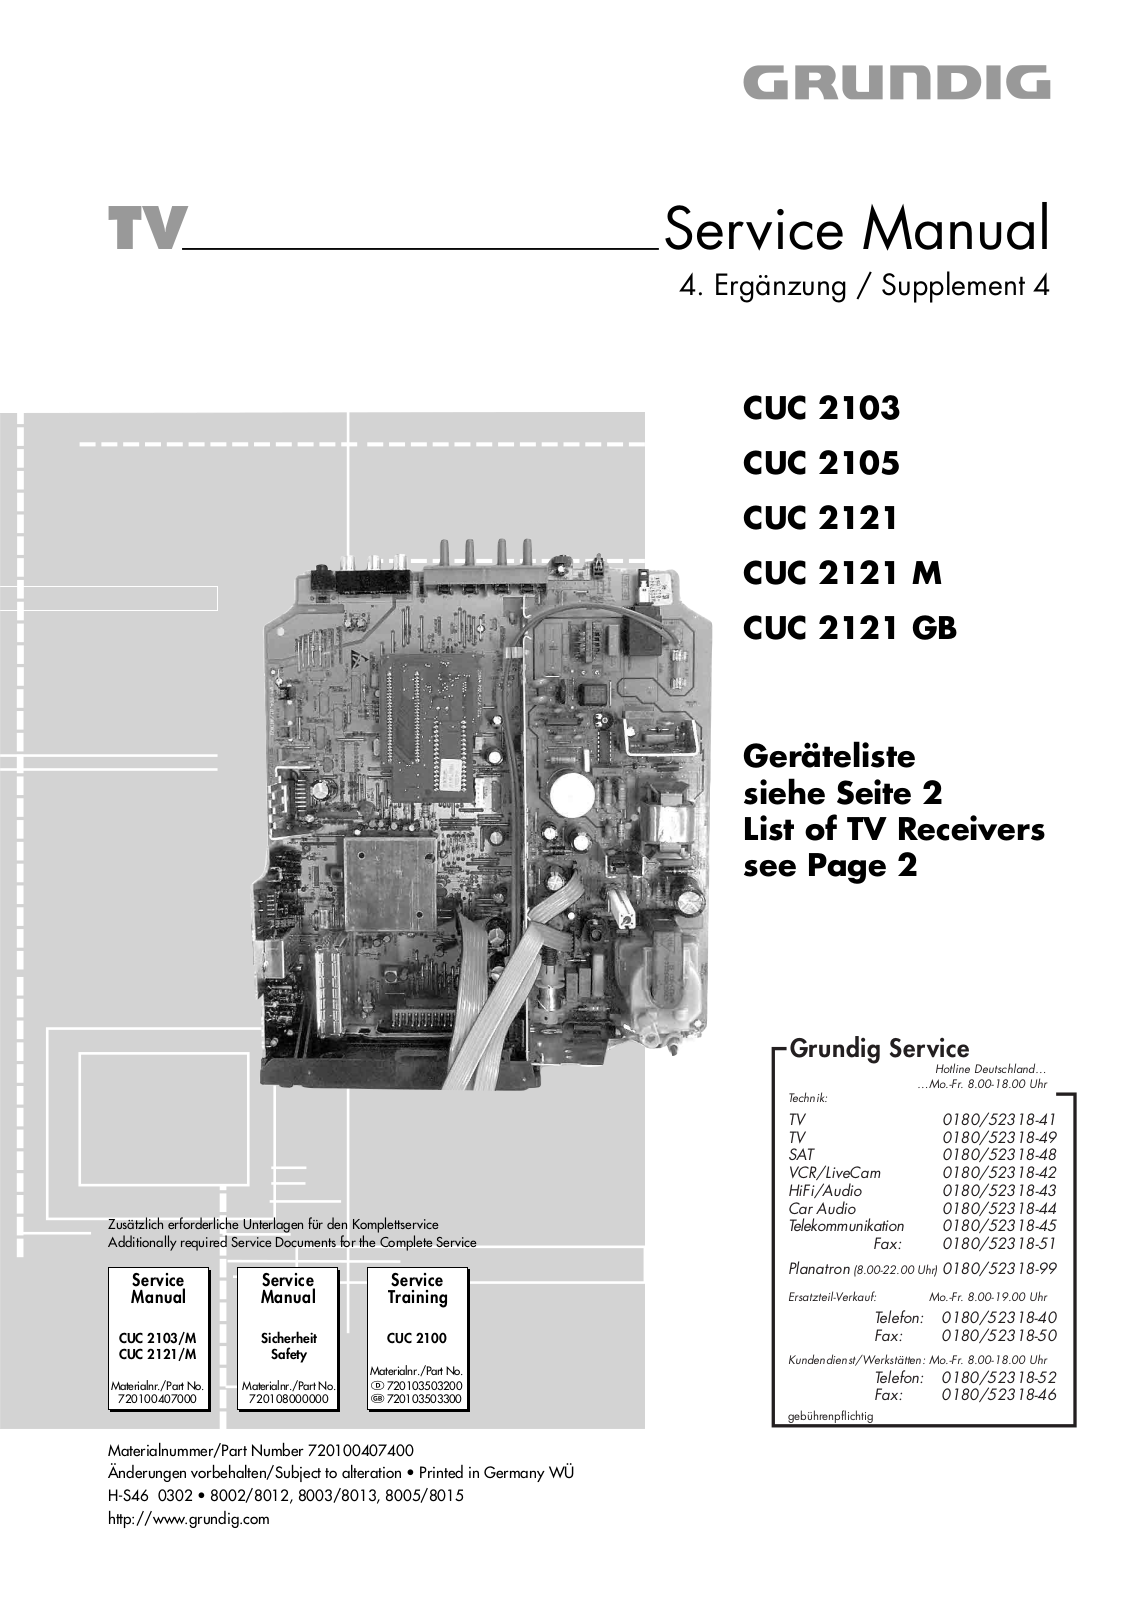 Grundig LEEMAXX 55, ST 55-839-8, ST 55-998, ST 55-908, ST 55-908-8 Service Manual